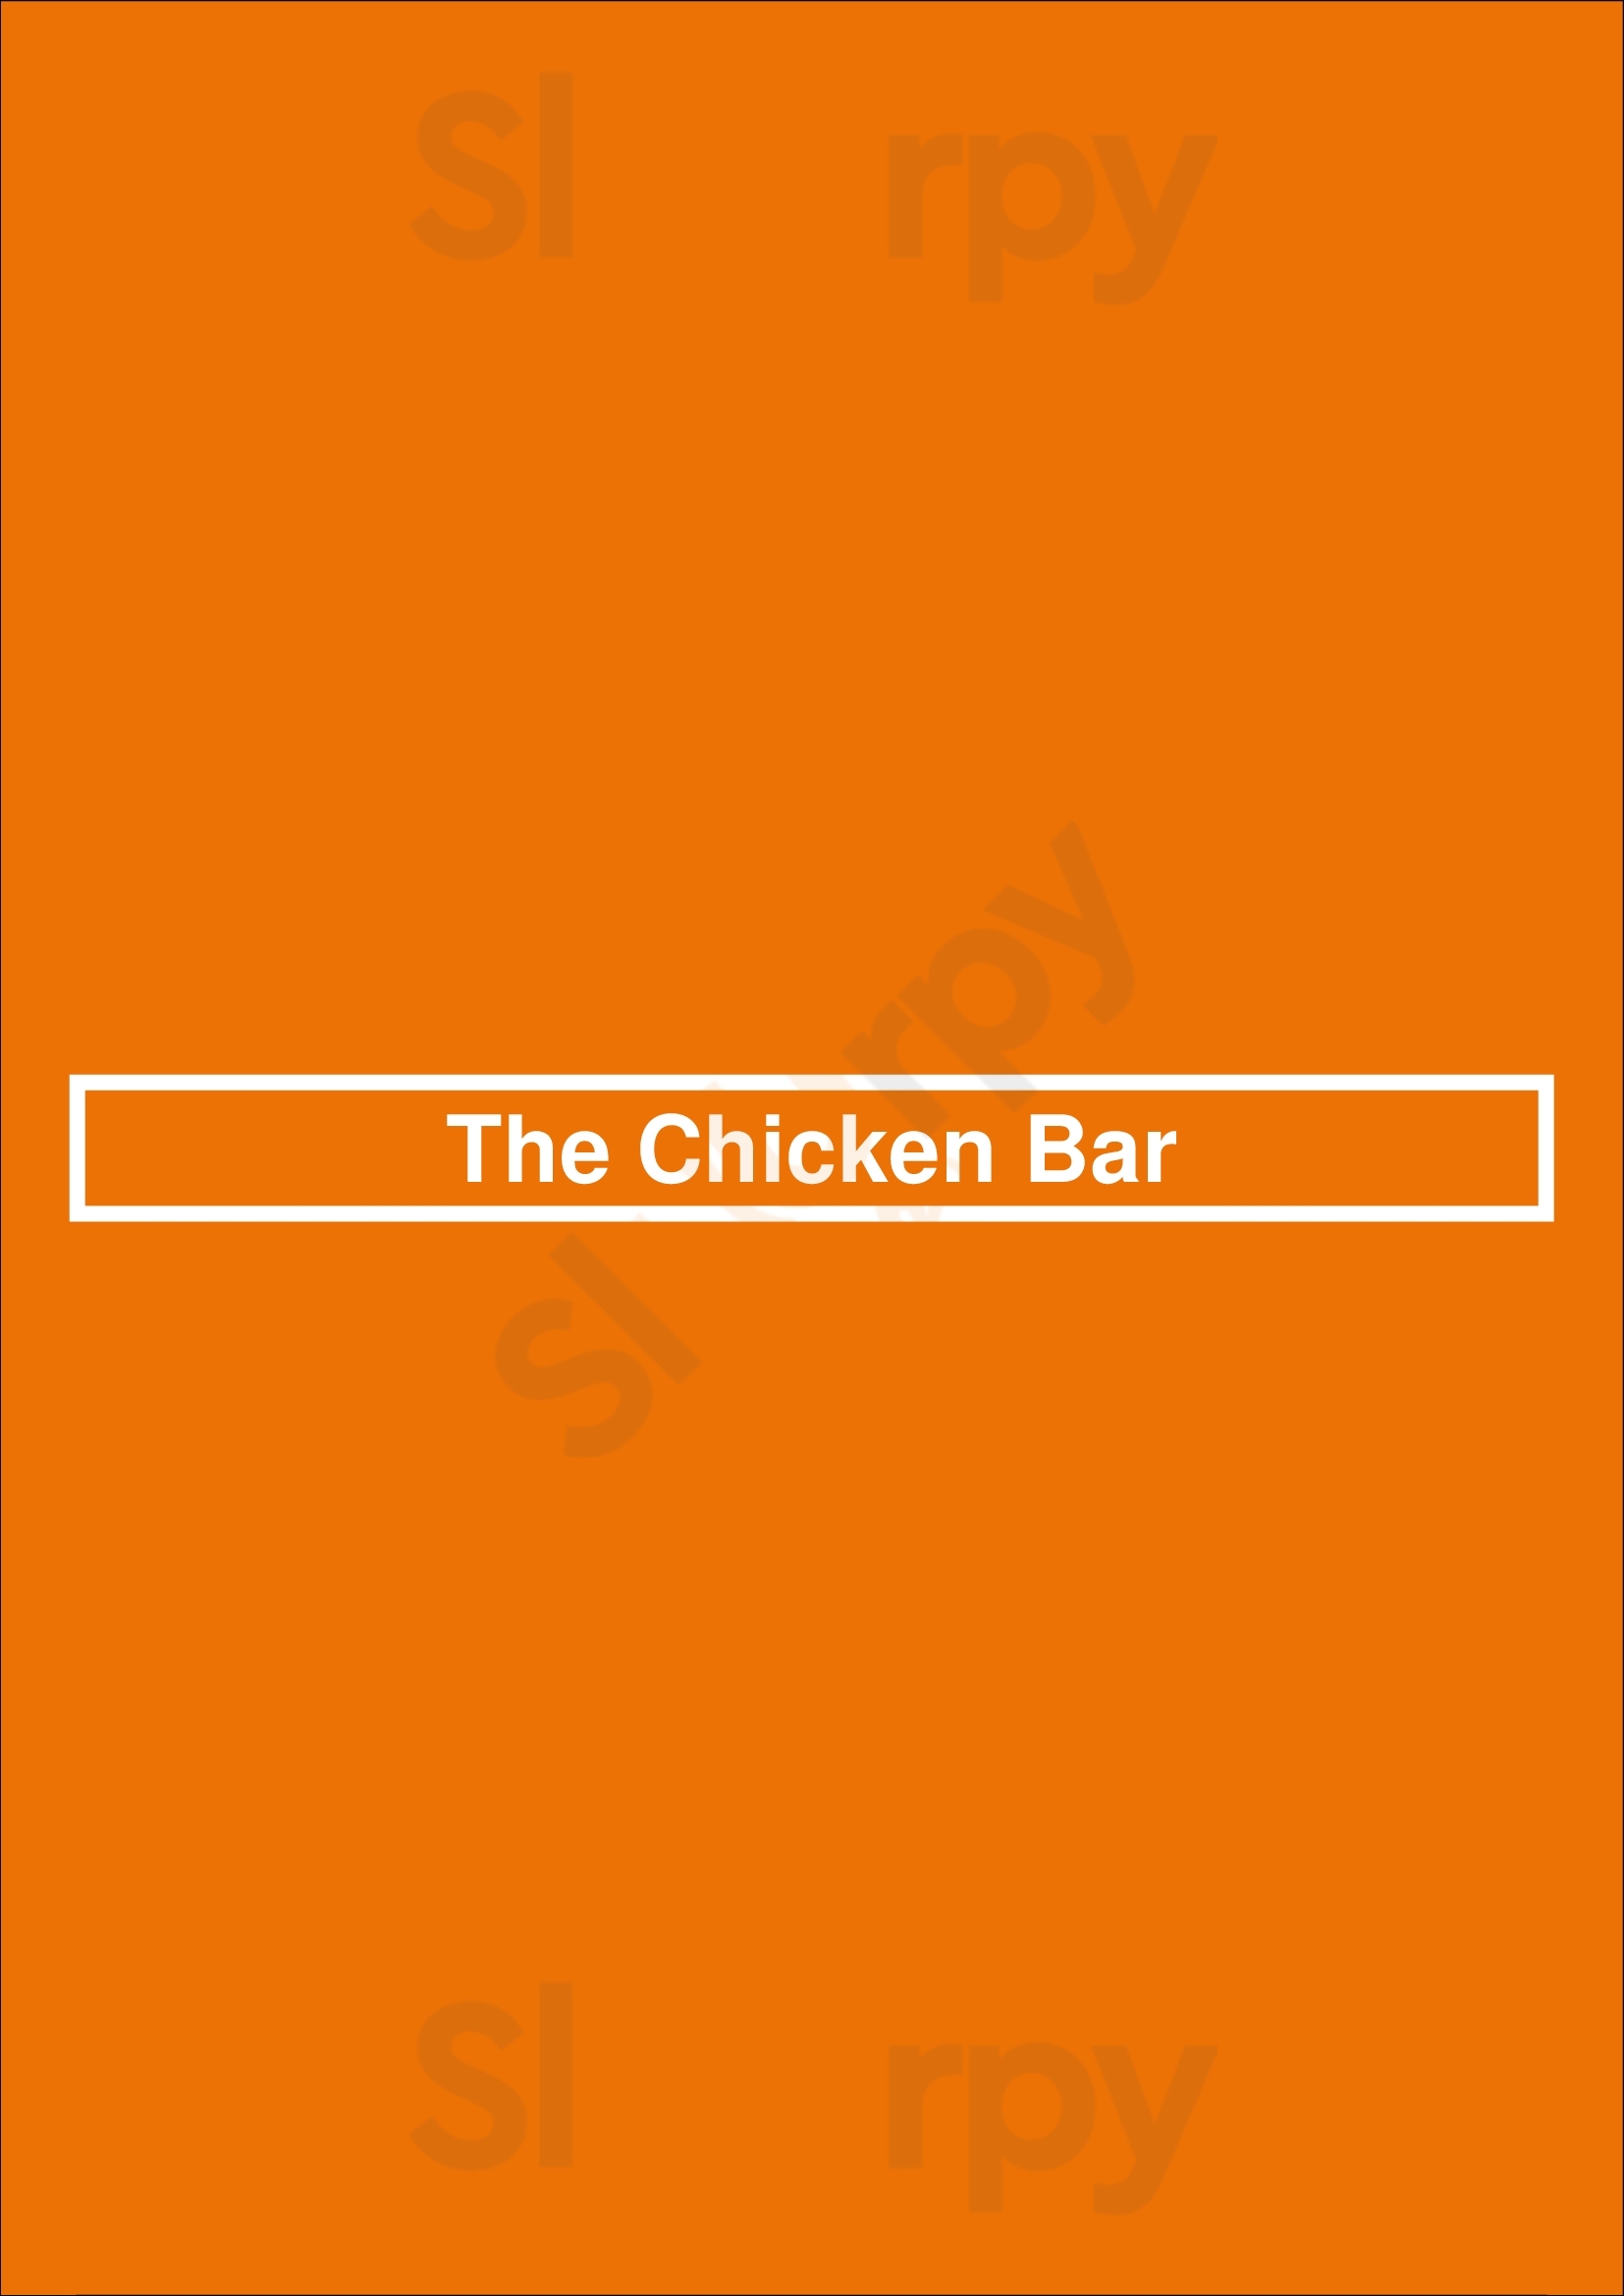 The Chicken Bar Amsterdam Menu - 1